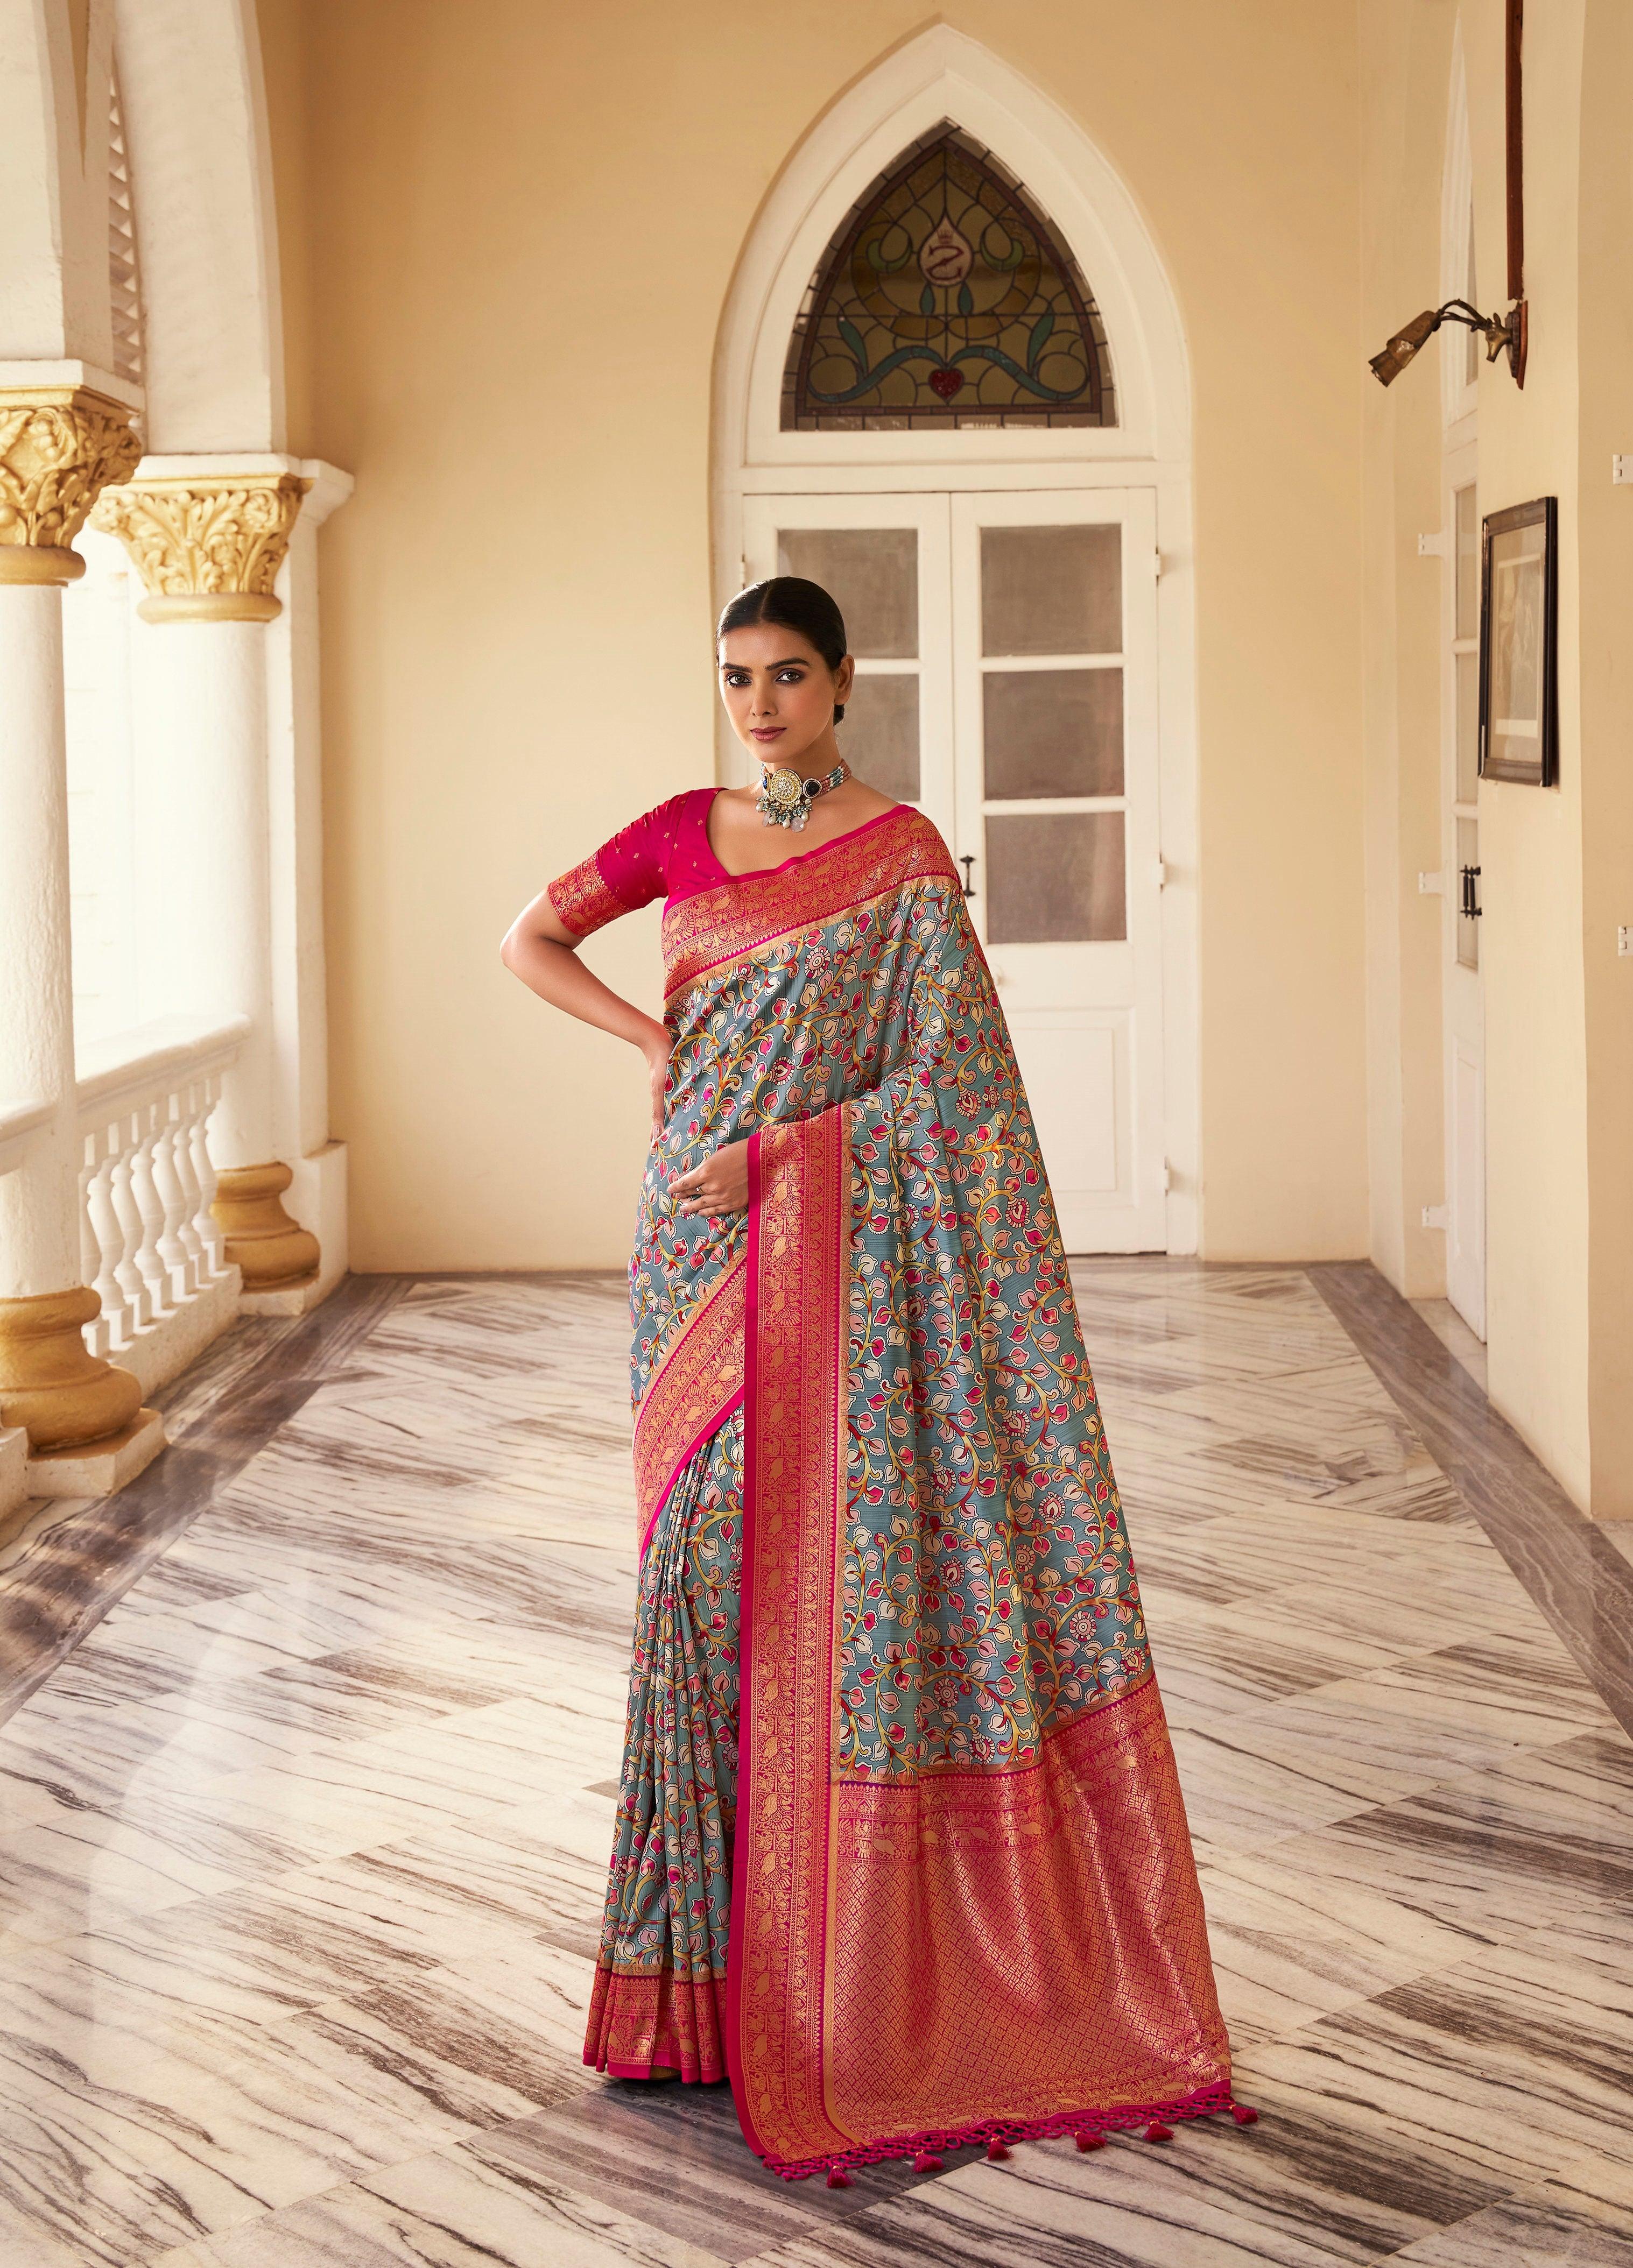 Buy latest Indian wedding sarees / saris online shopping - Cash on delivery  @ zatki.com.